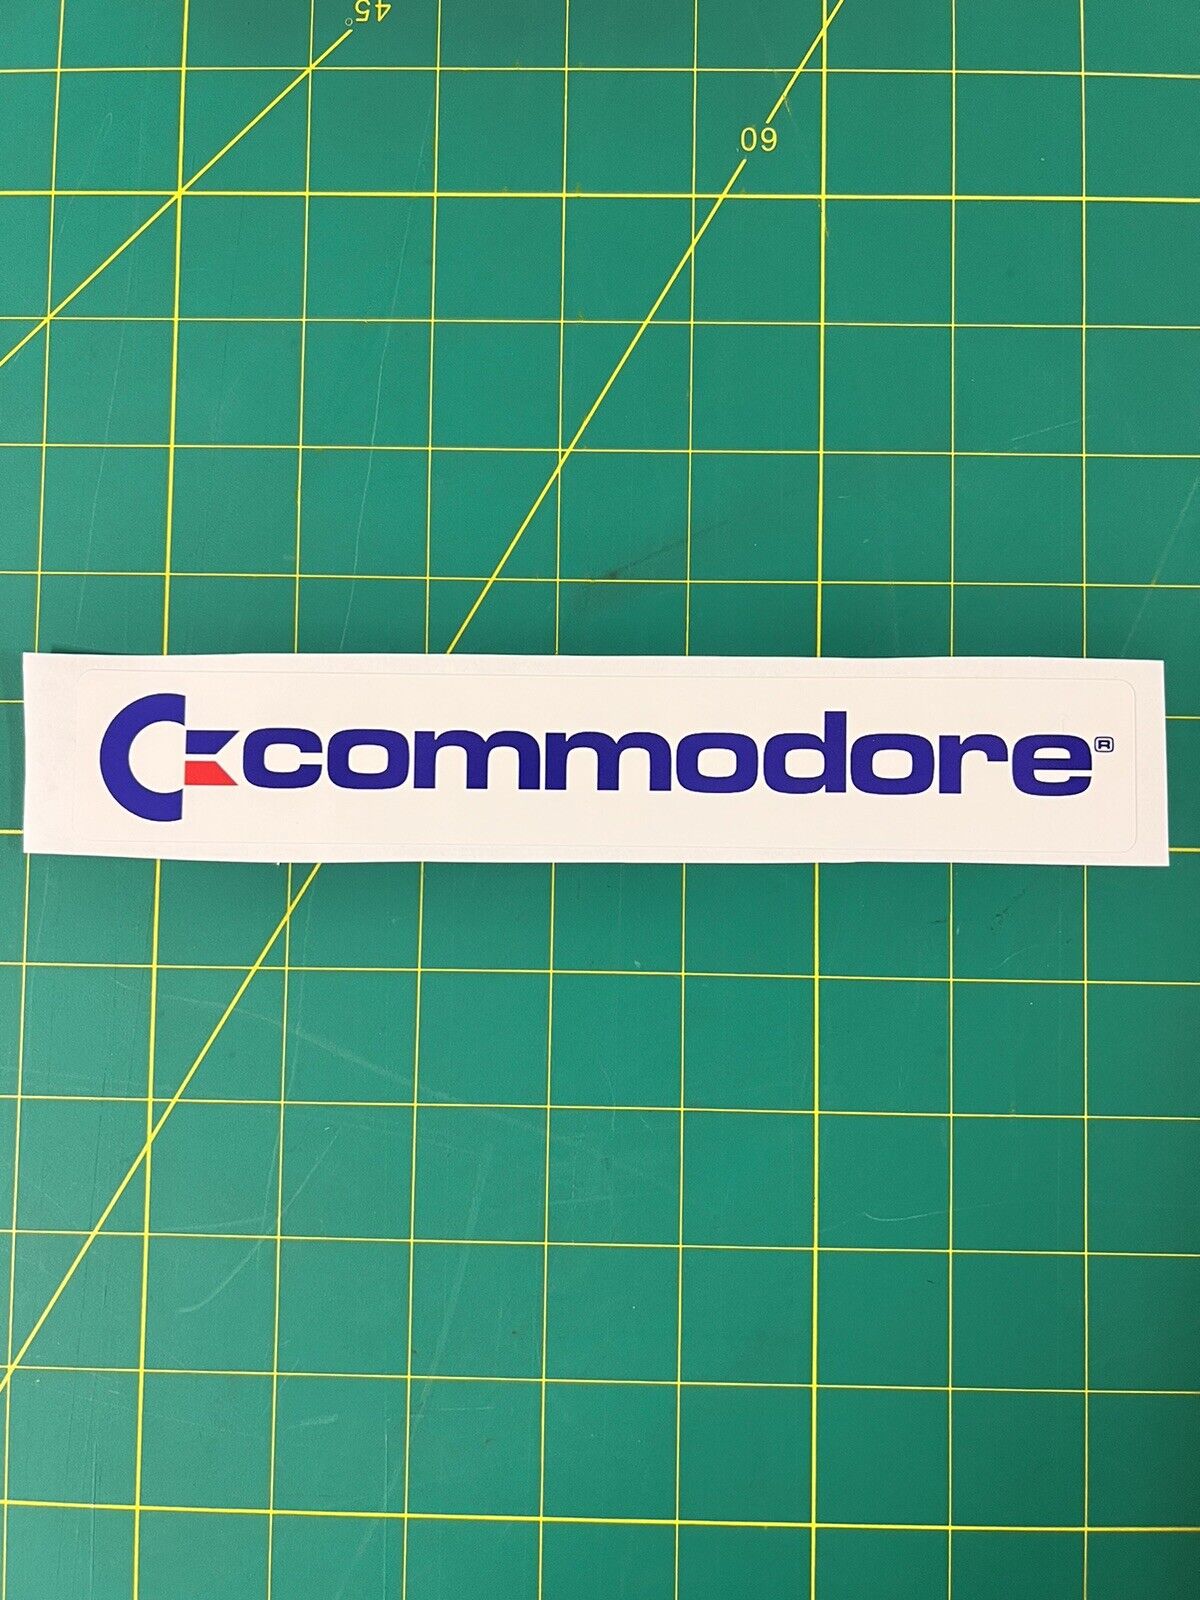 Commodore 64 128 Amiga logo decal